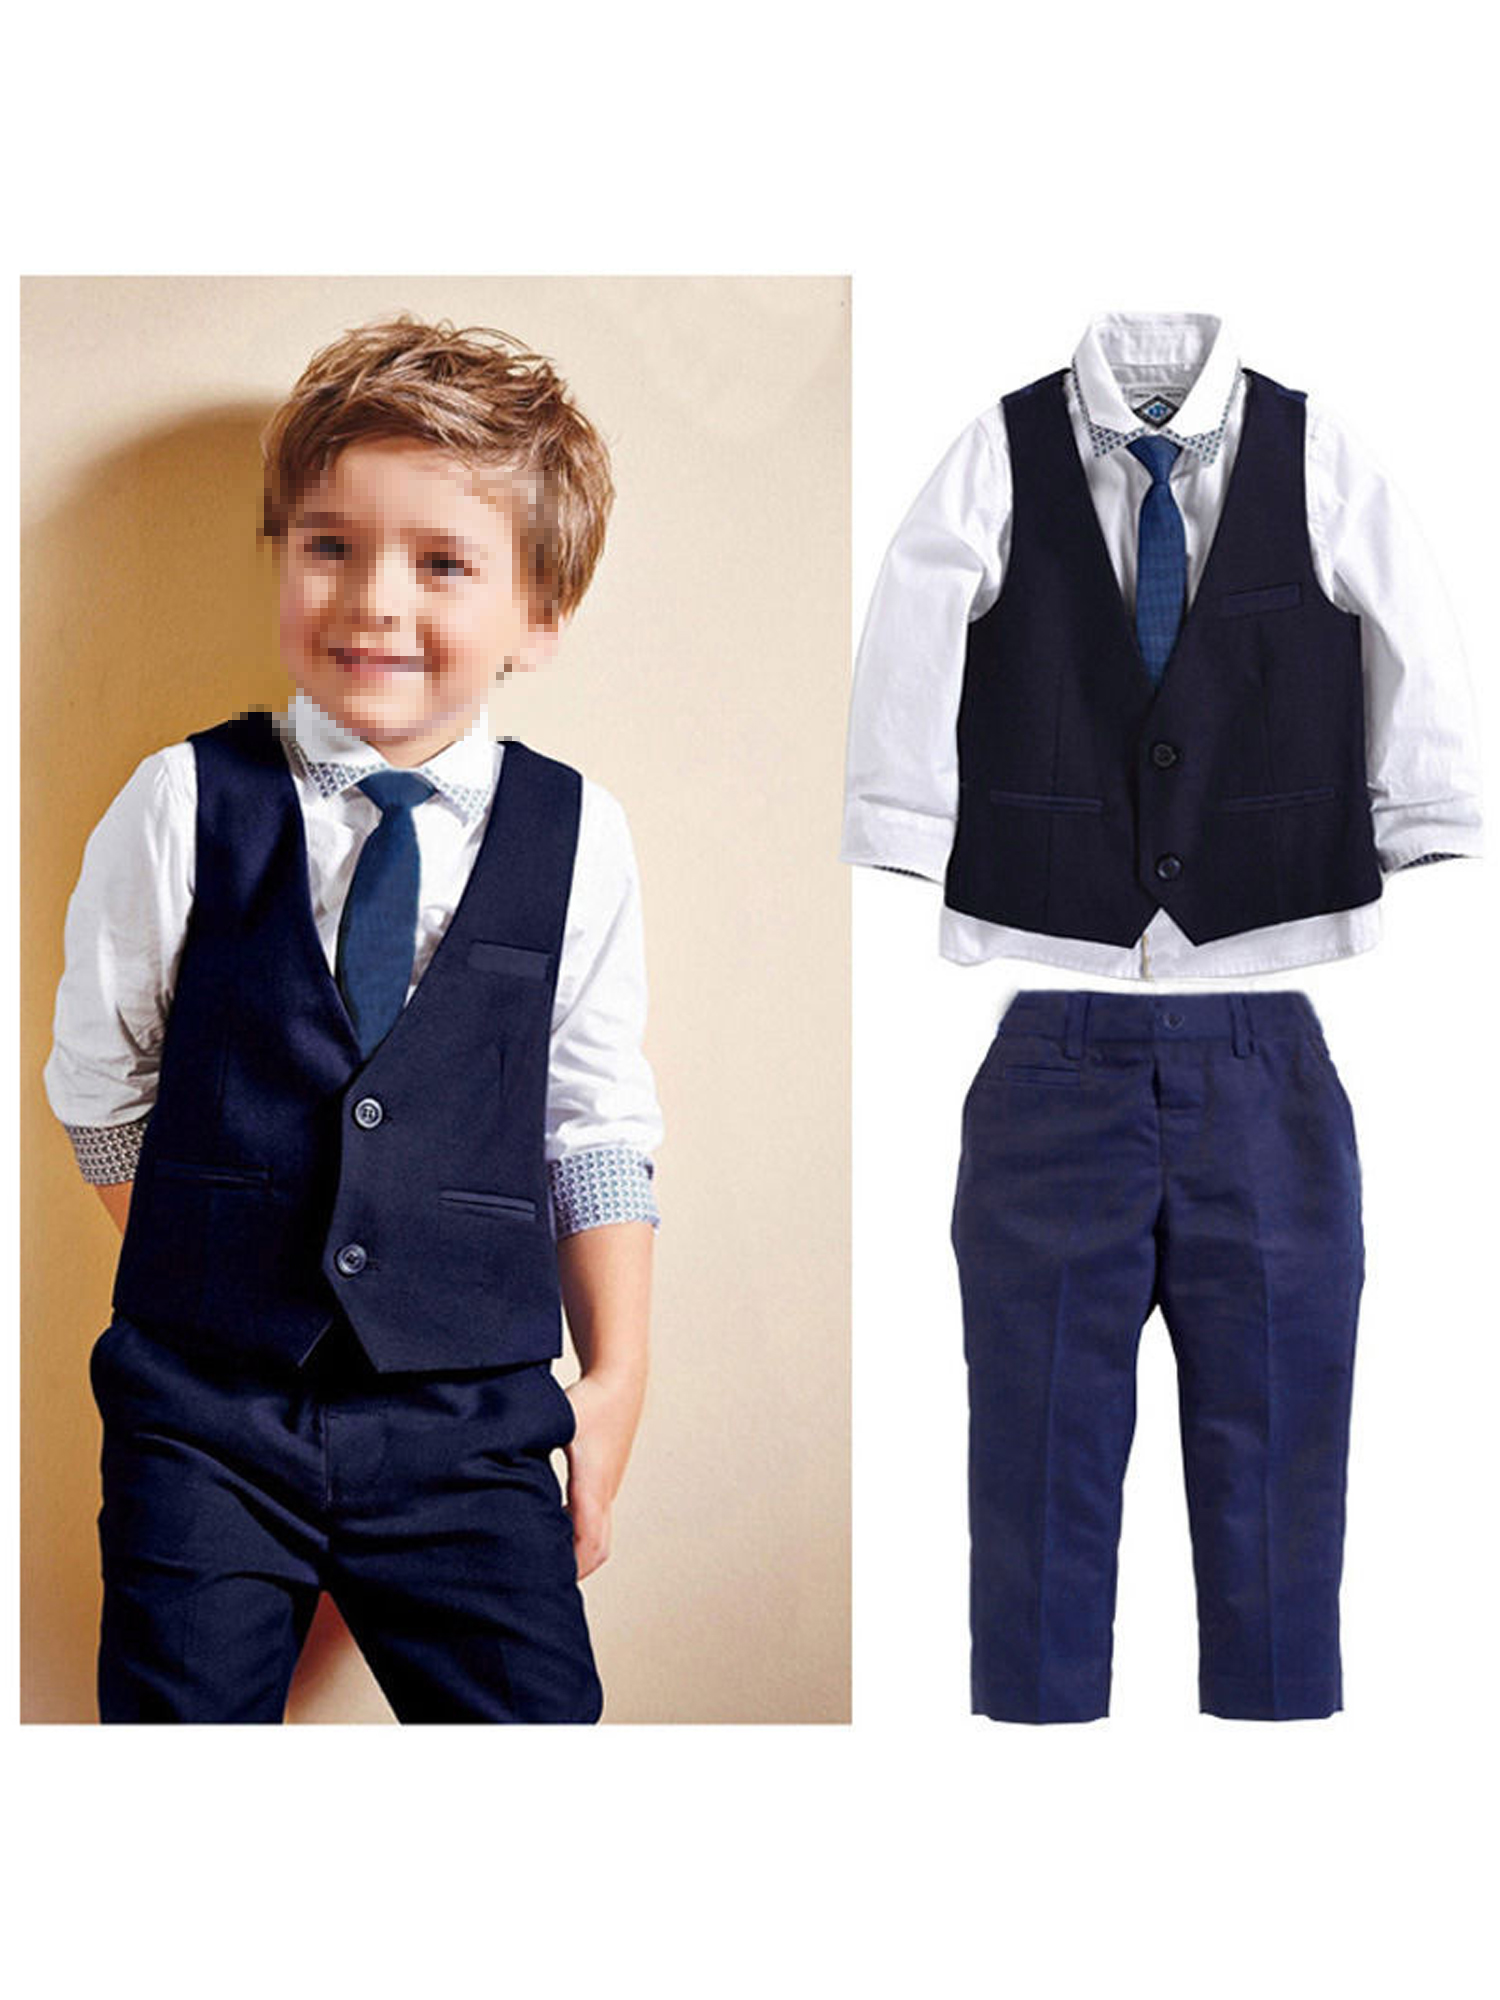 Licupiee Little Toddler Gentleman Boys Party Clothes Outerwear+Shirt ...